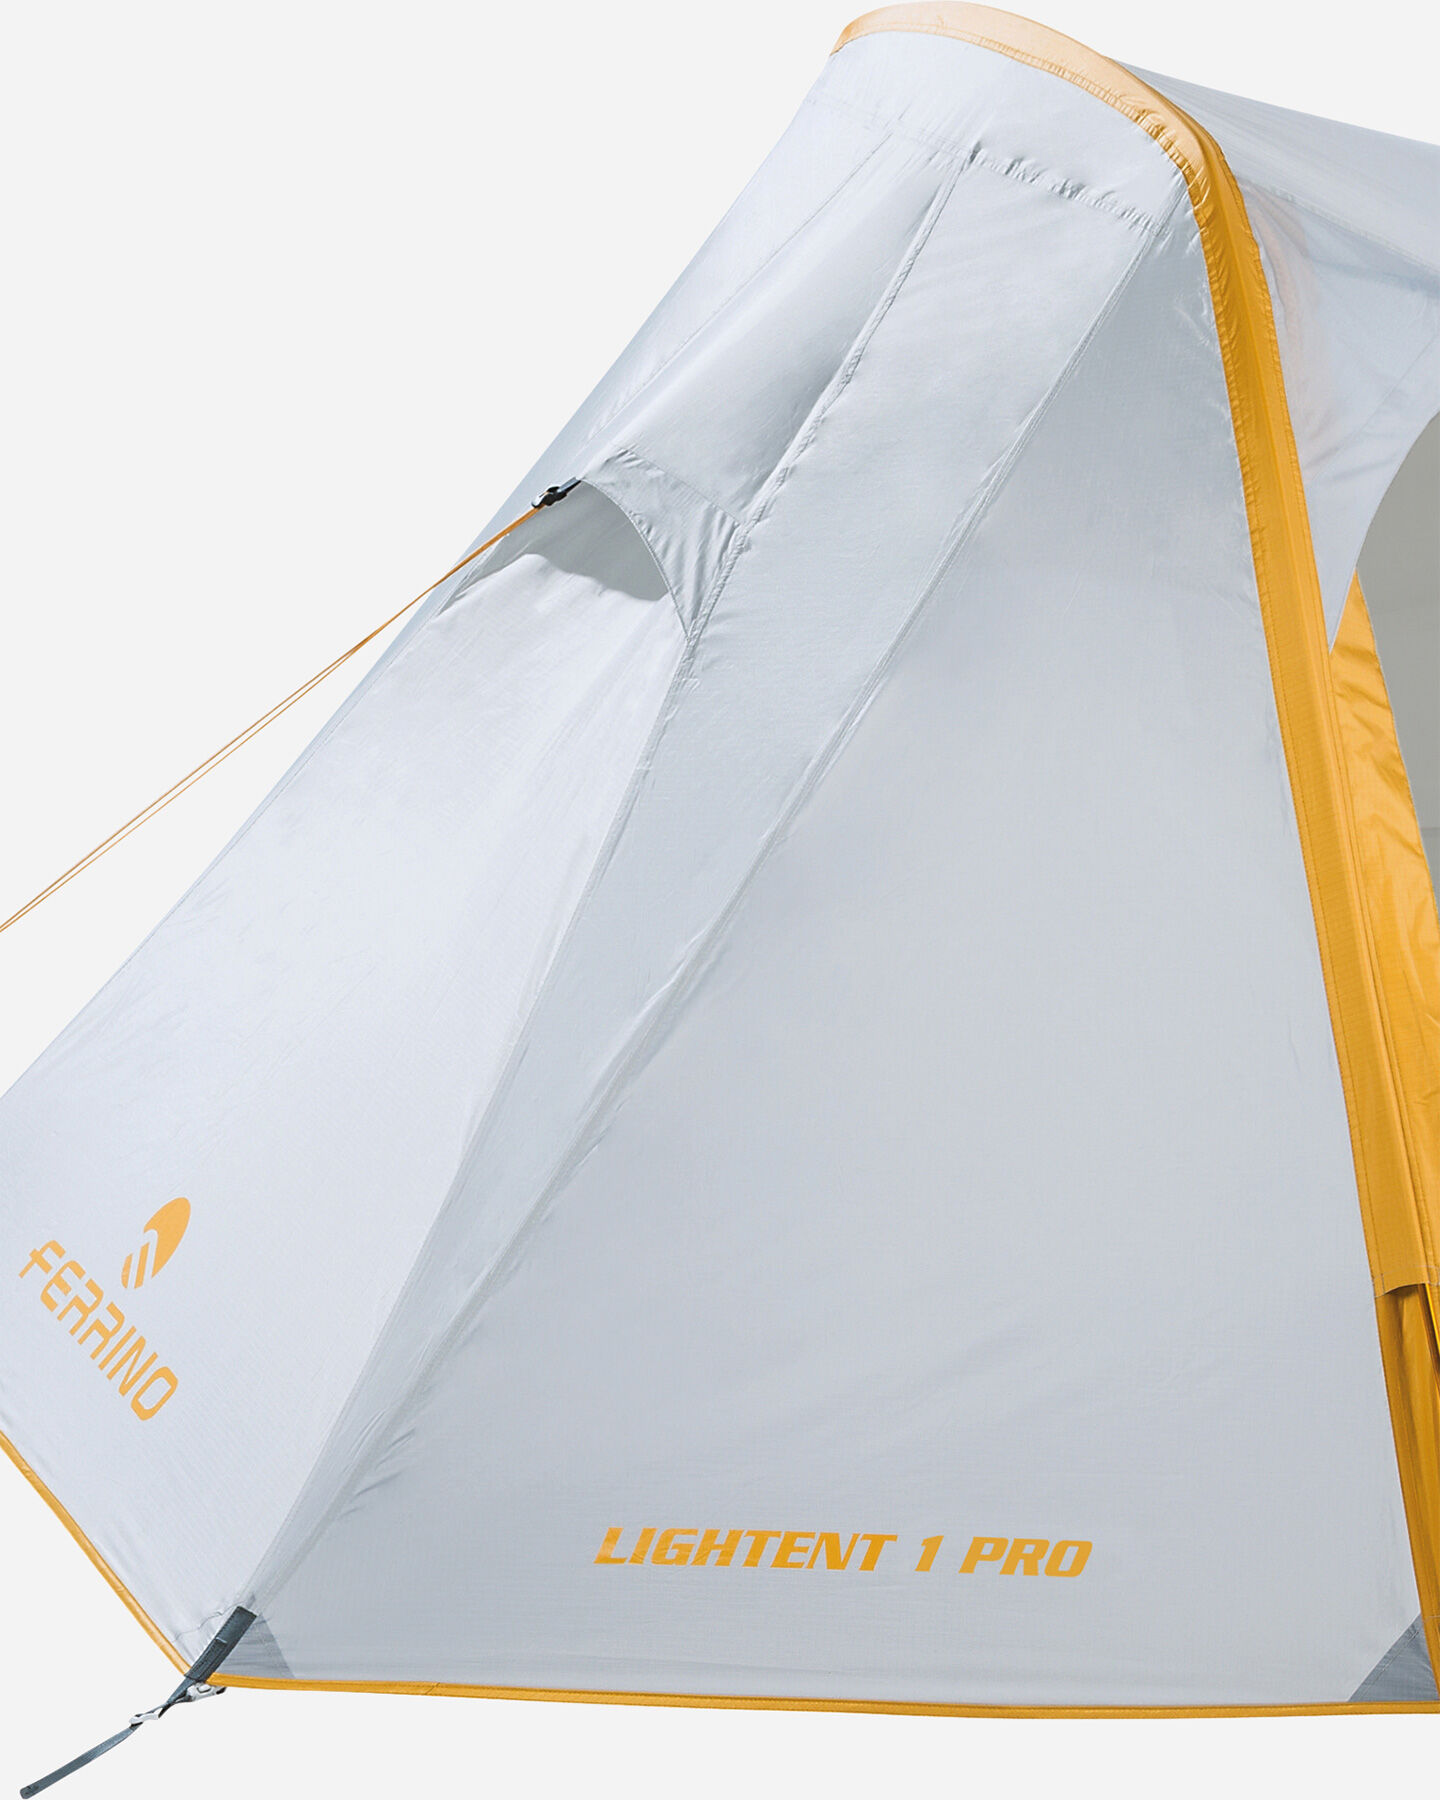  Tenda FERRINO LIGHTENT 1 PRO  S4118220|LIIFR|UNI scatto 1